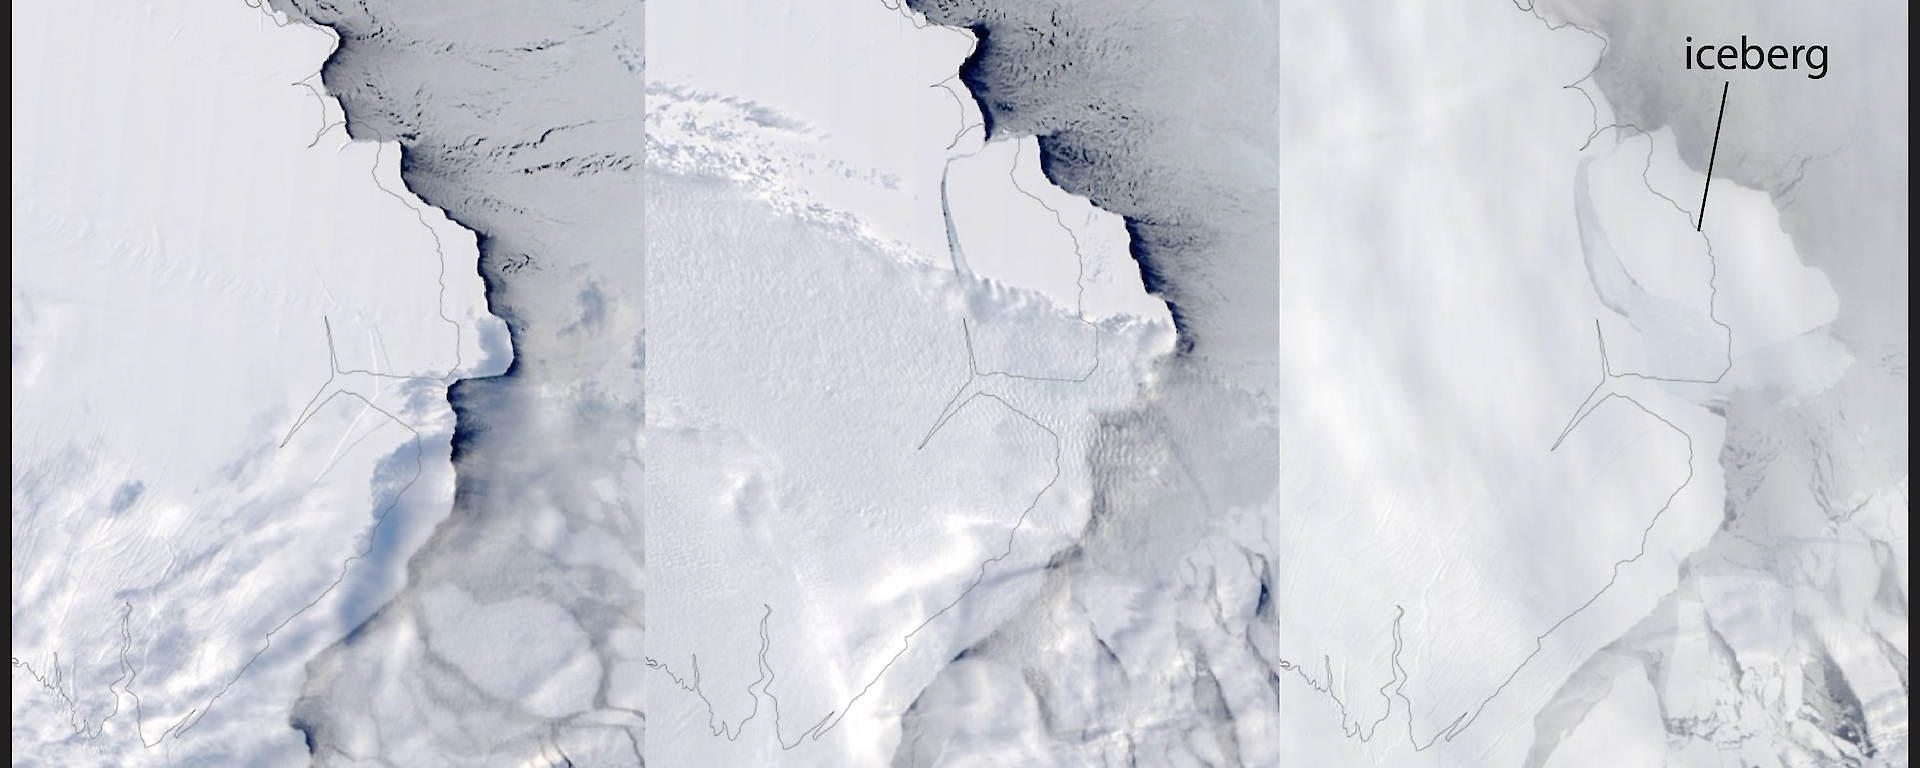 The Amery Ice Shelf iceberg calving sequence.